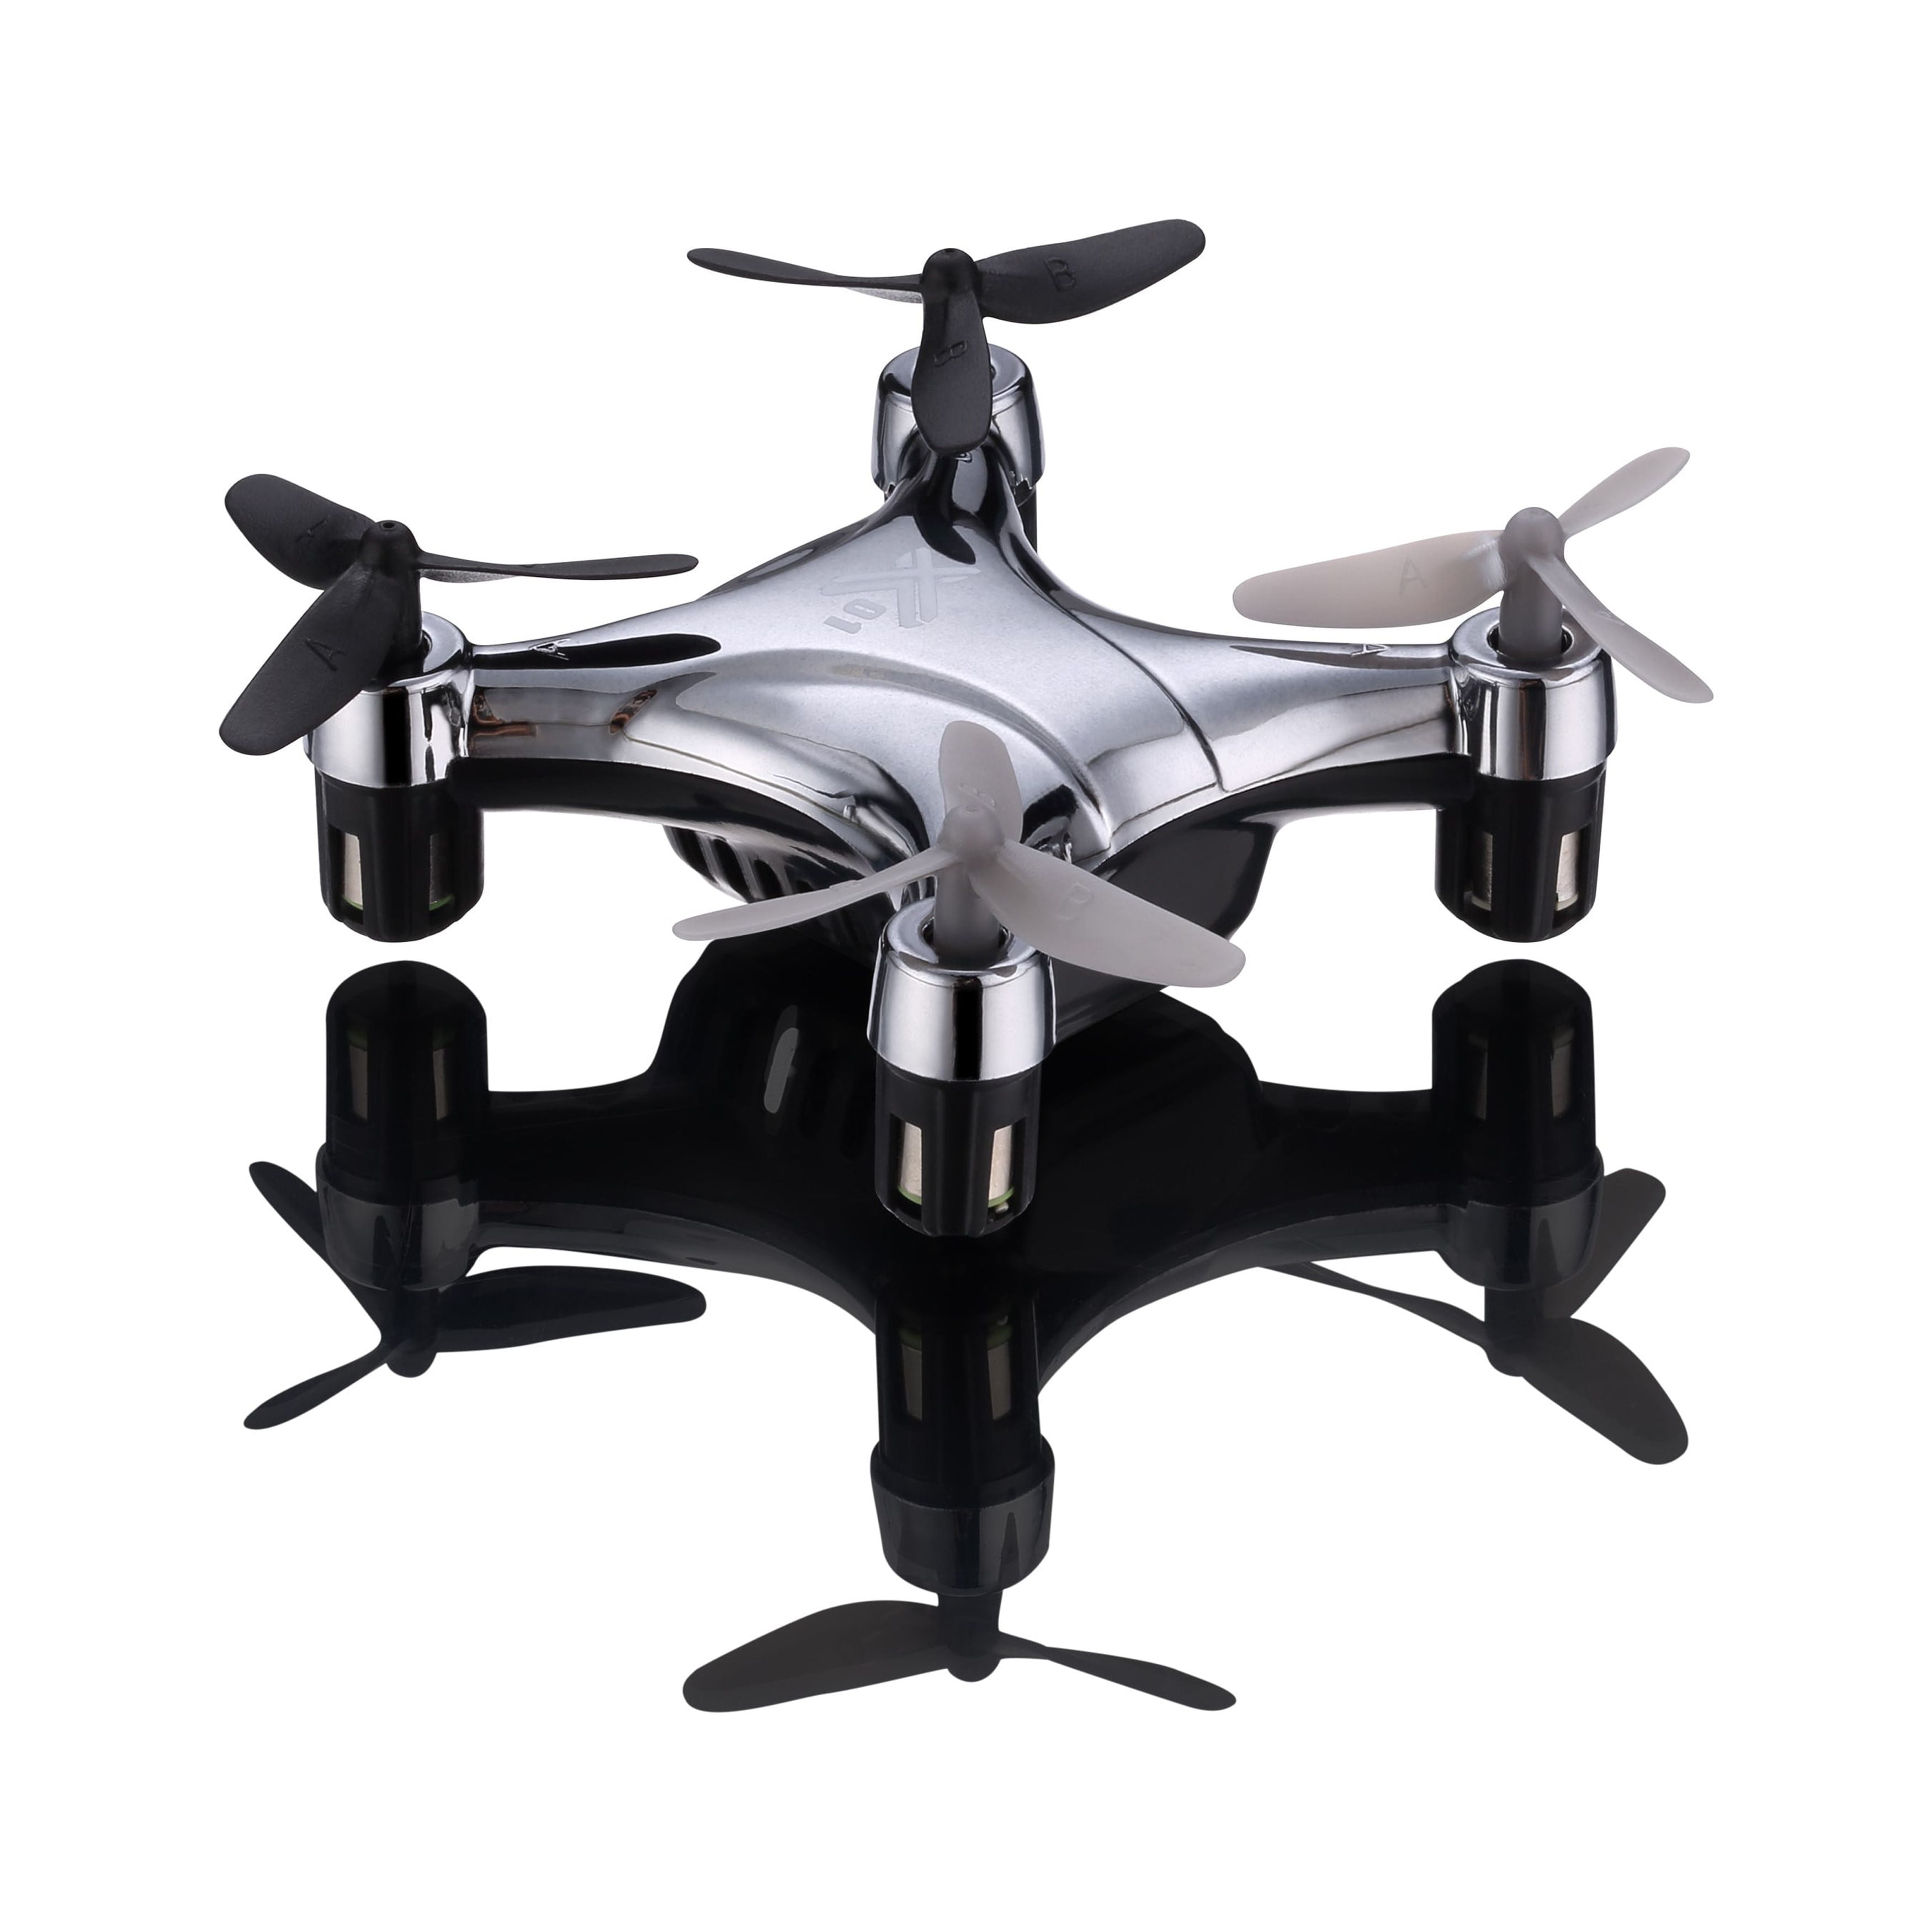 Propel Maximum Gray X01 Micro Drone